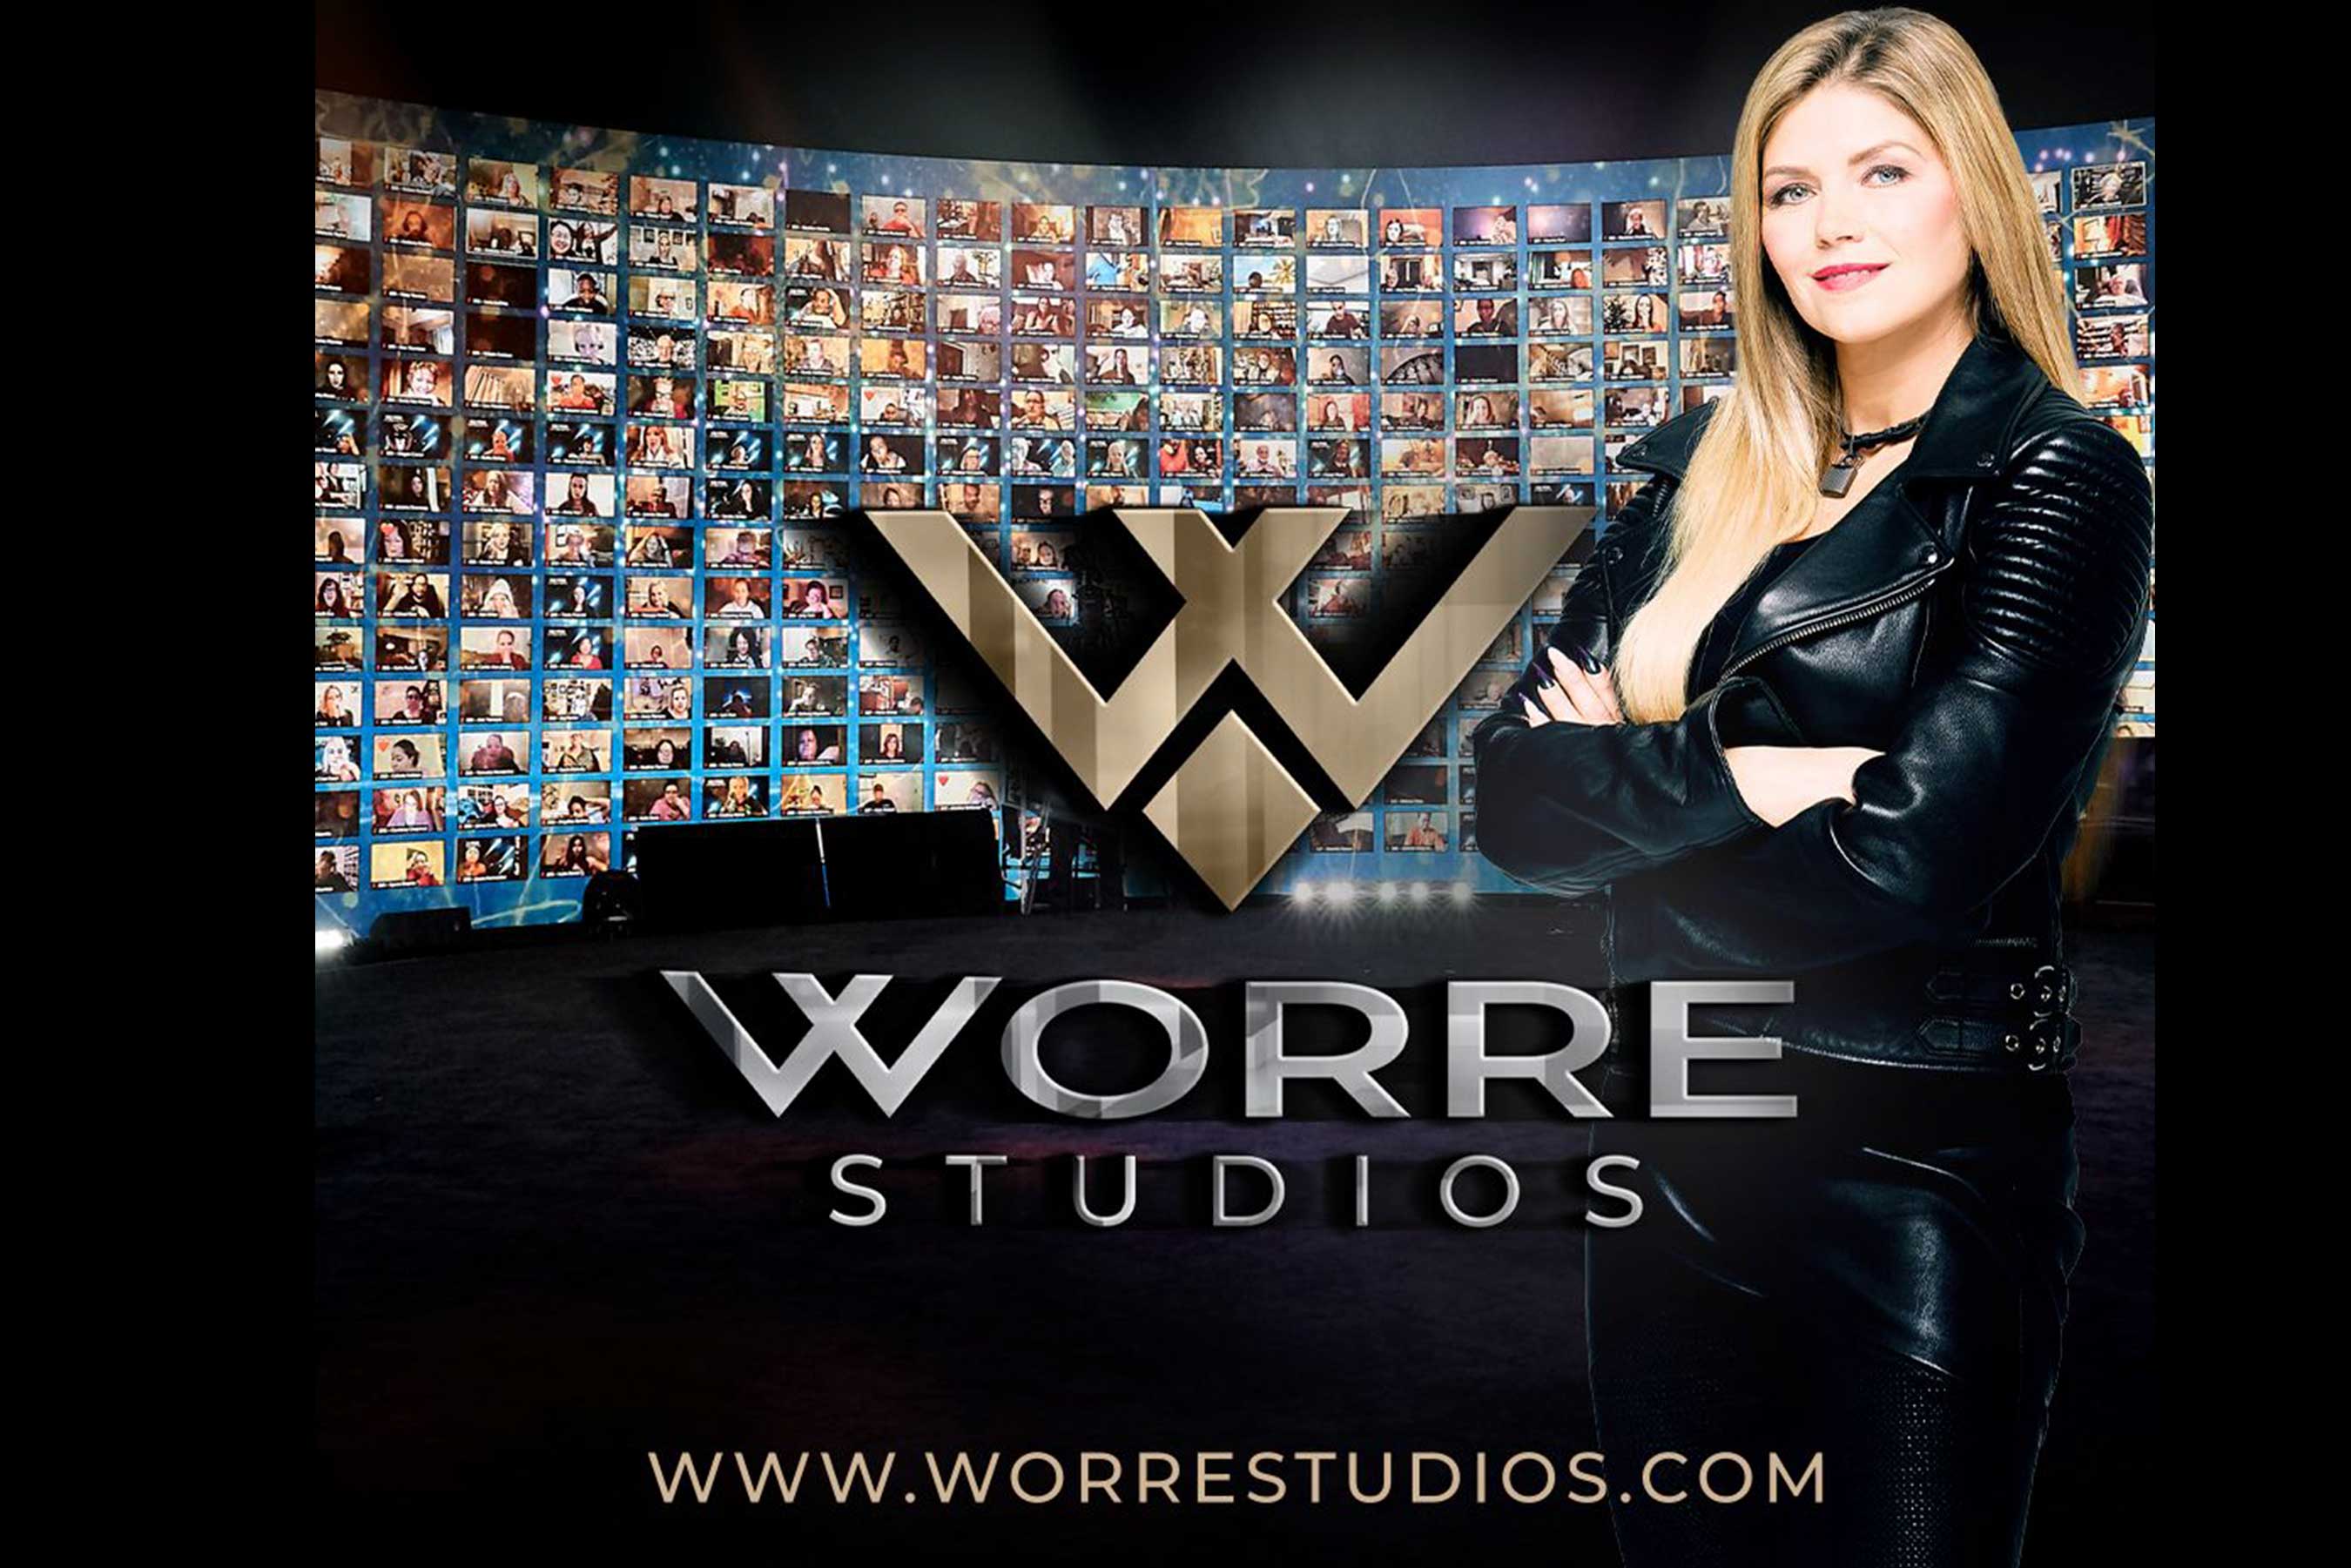 Worre Studios Founder